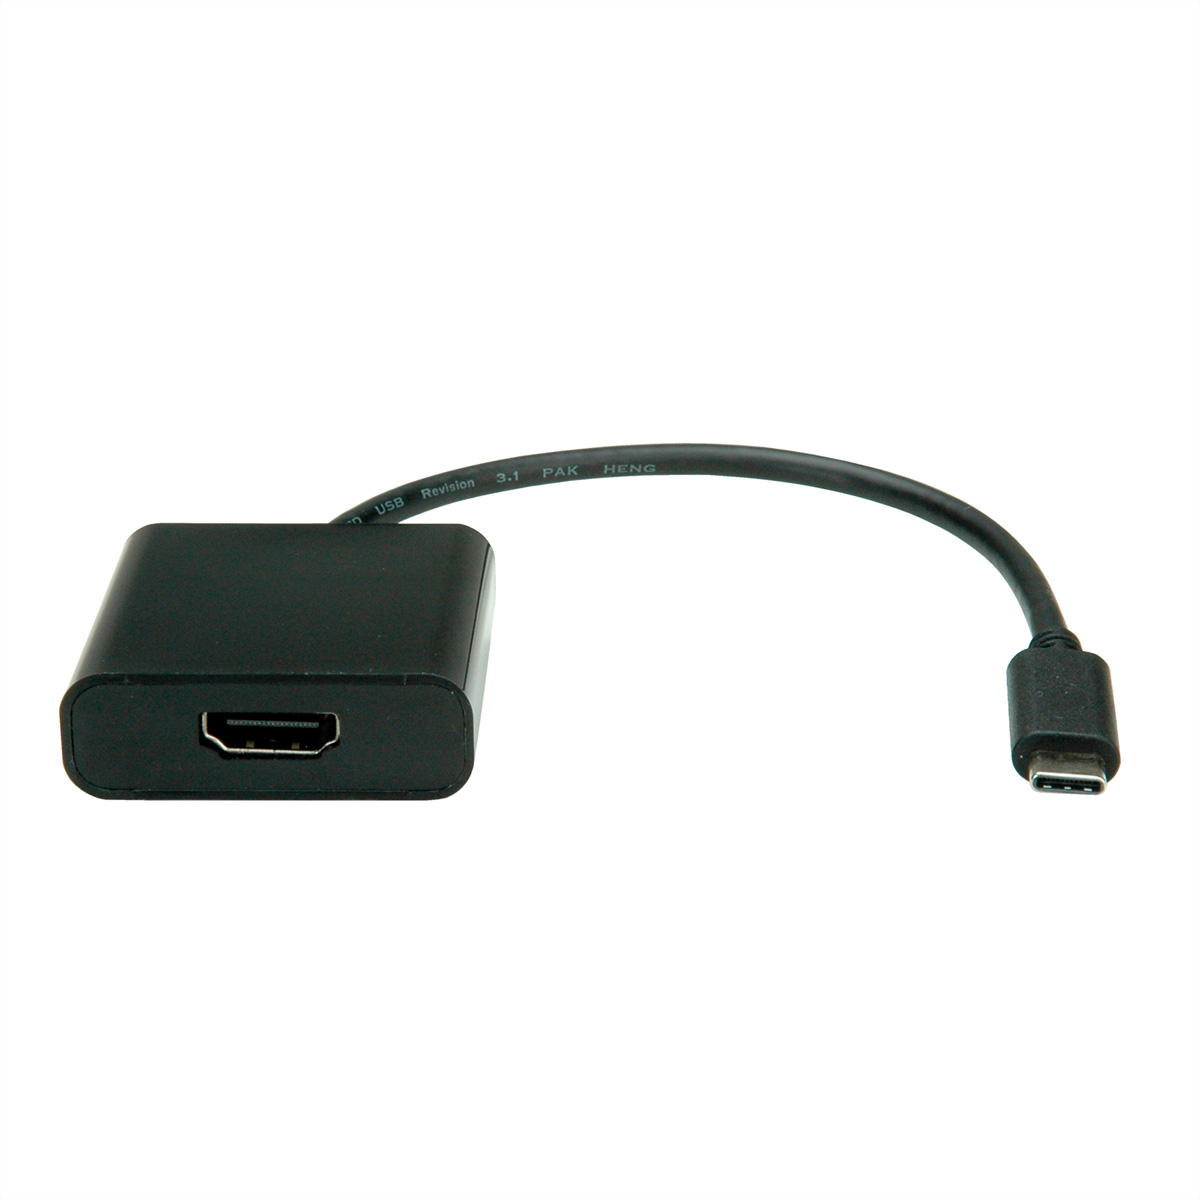 USB-HDMI Typ HDMI Display Adapter - VALUE C 4K Adapter USB